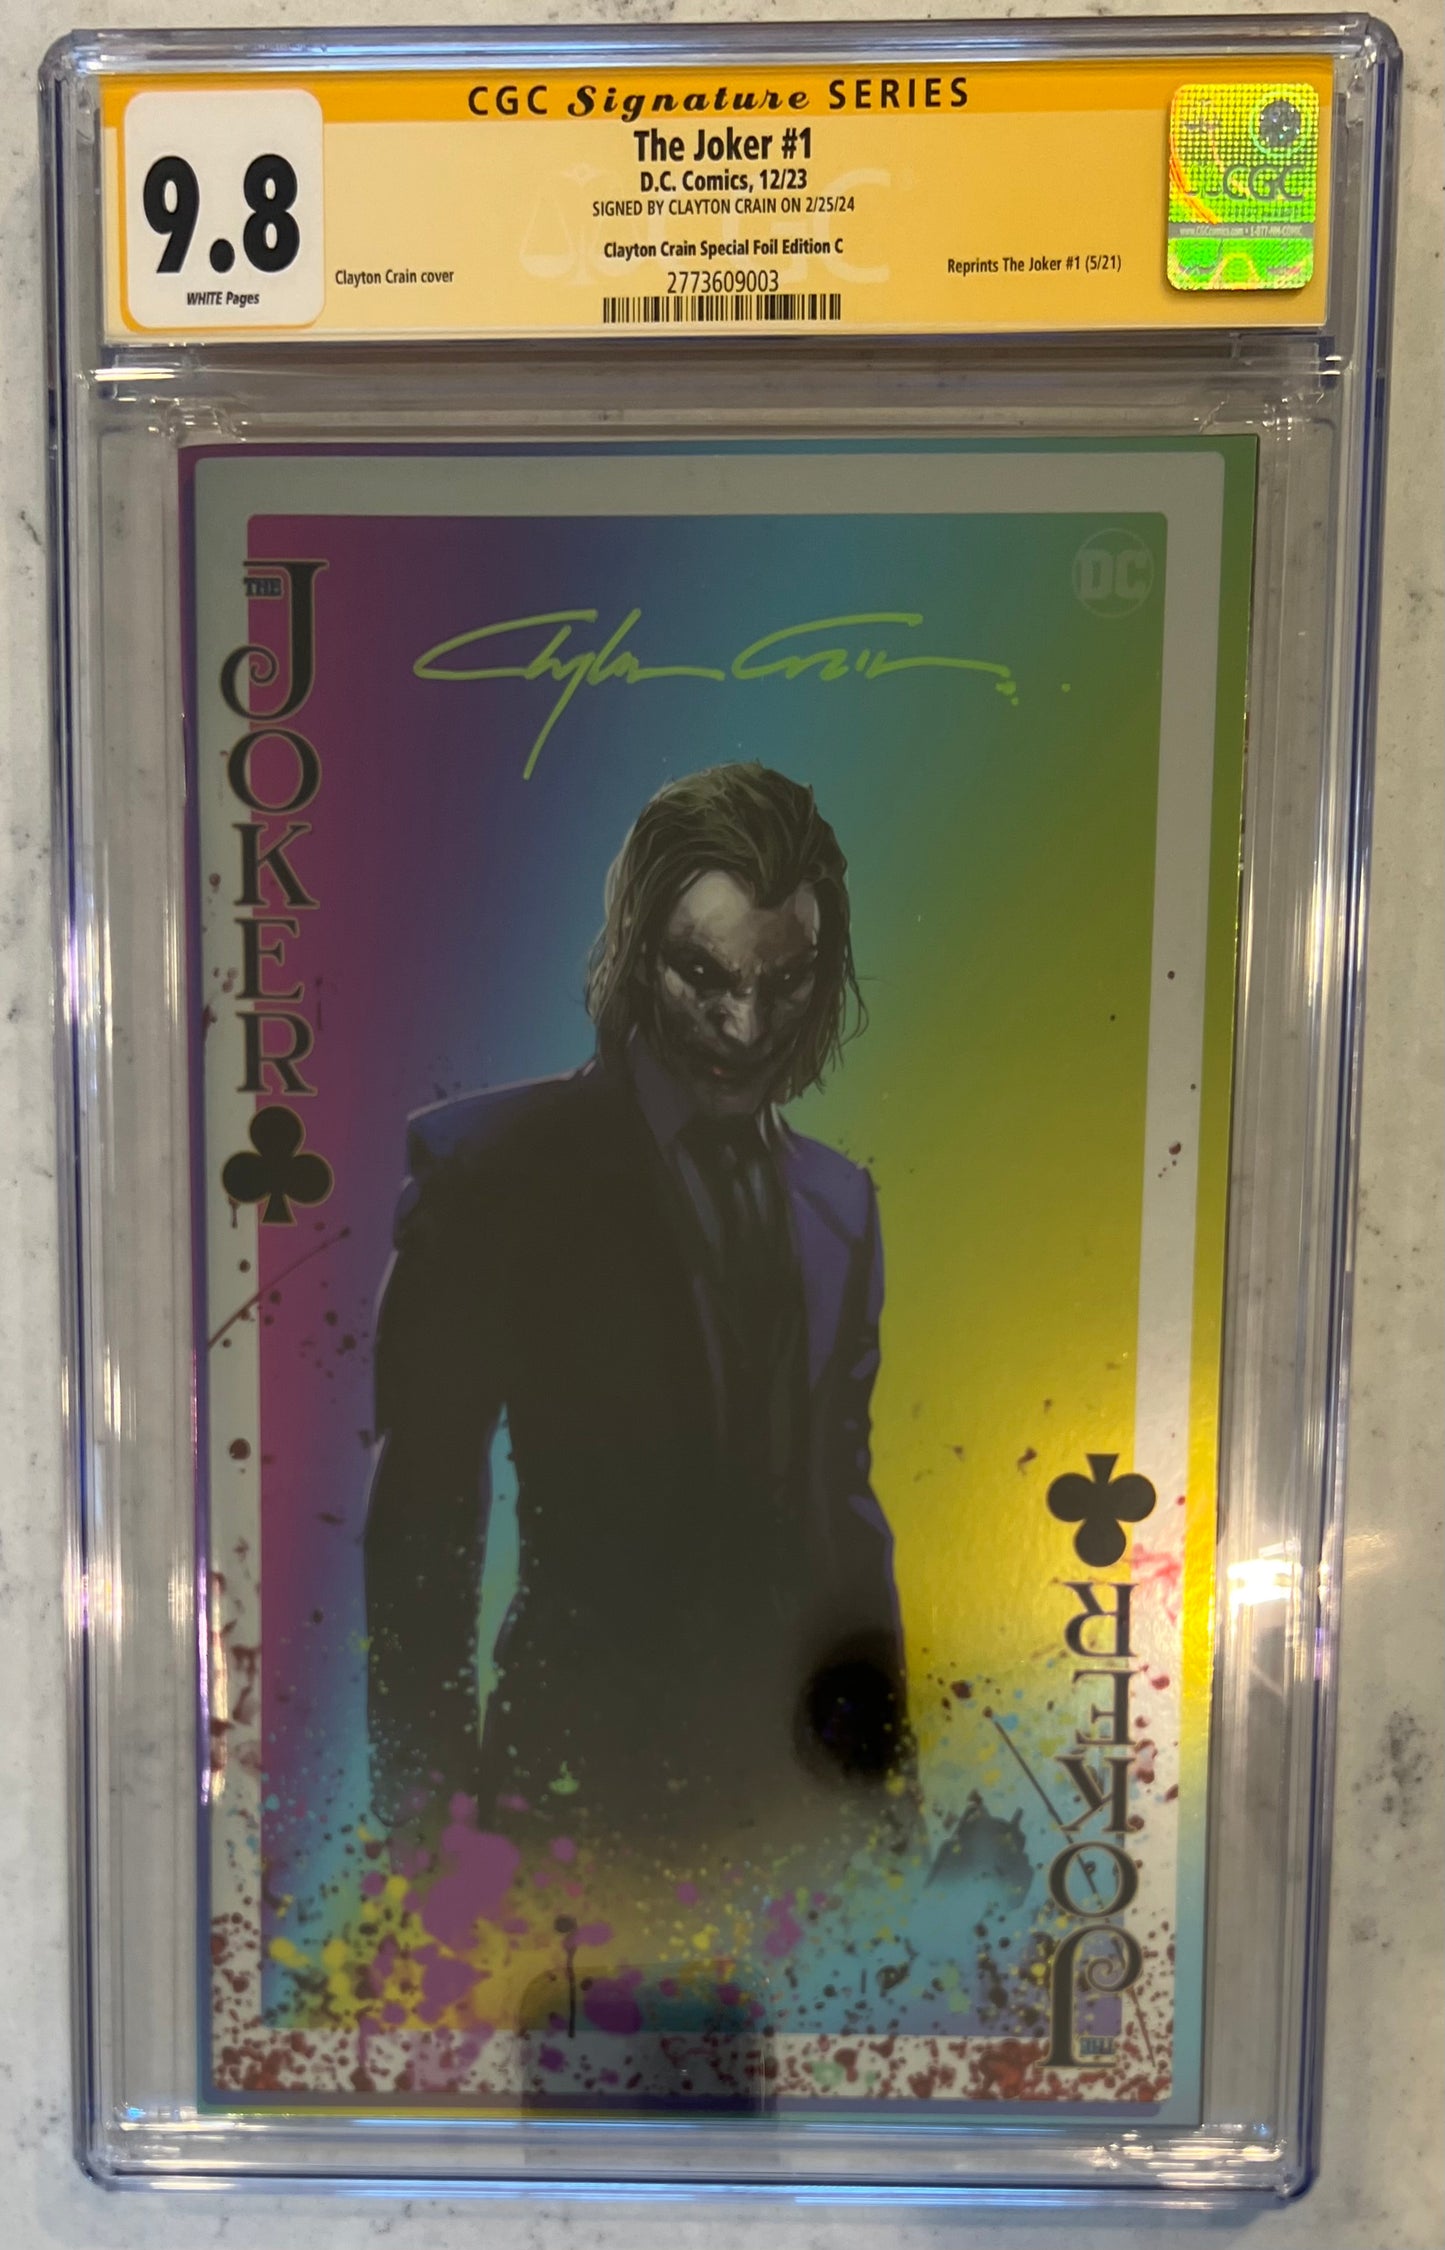 The Joker #1 CGC SS by Clayton Crain (Megacon Variant)